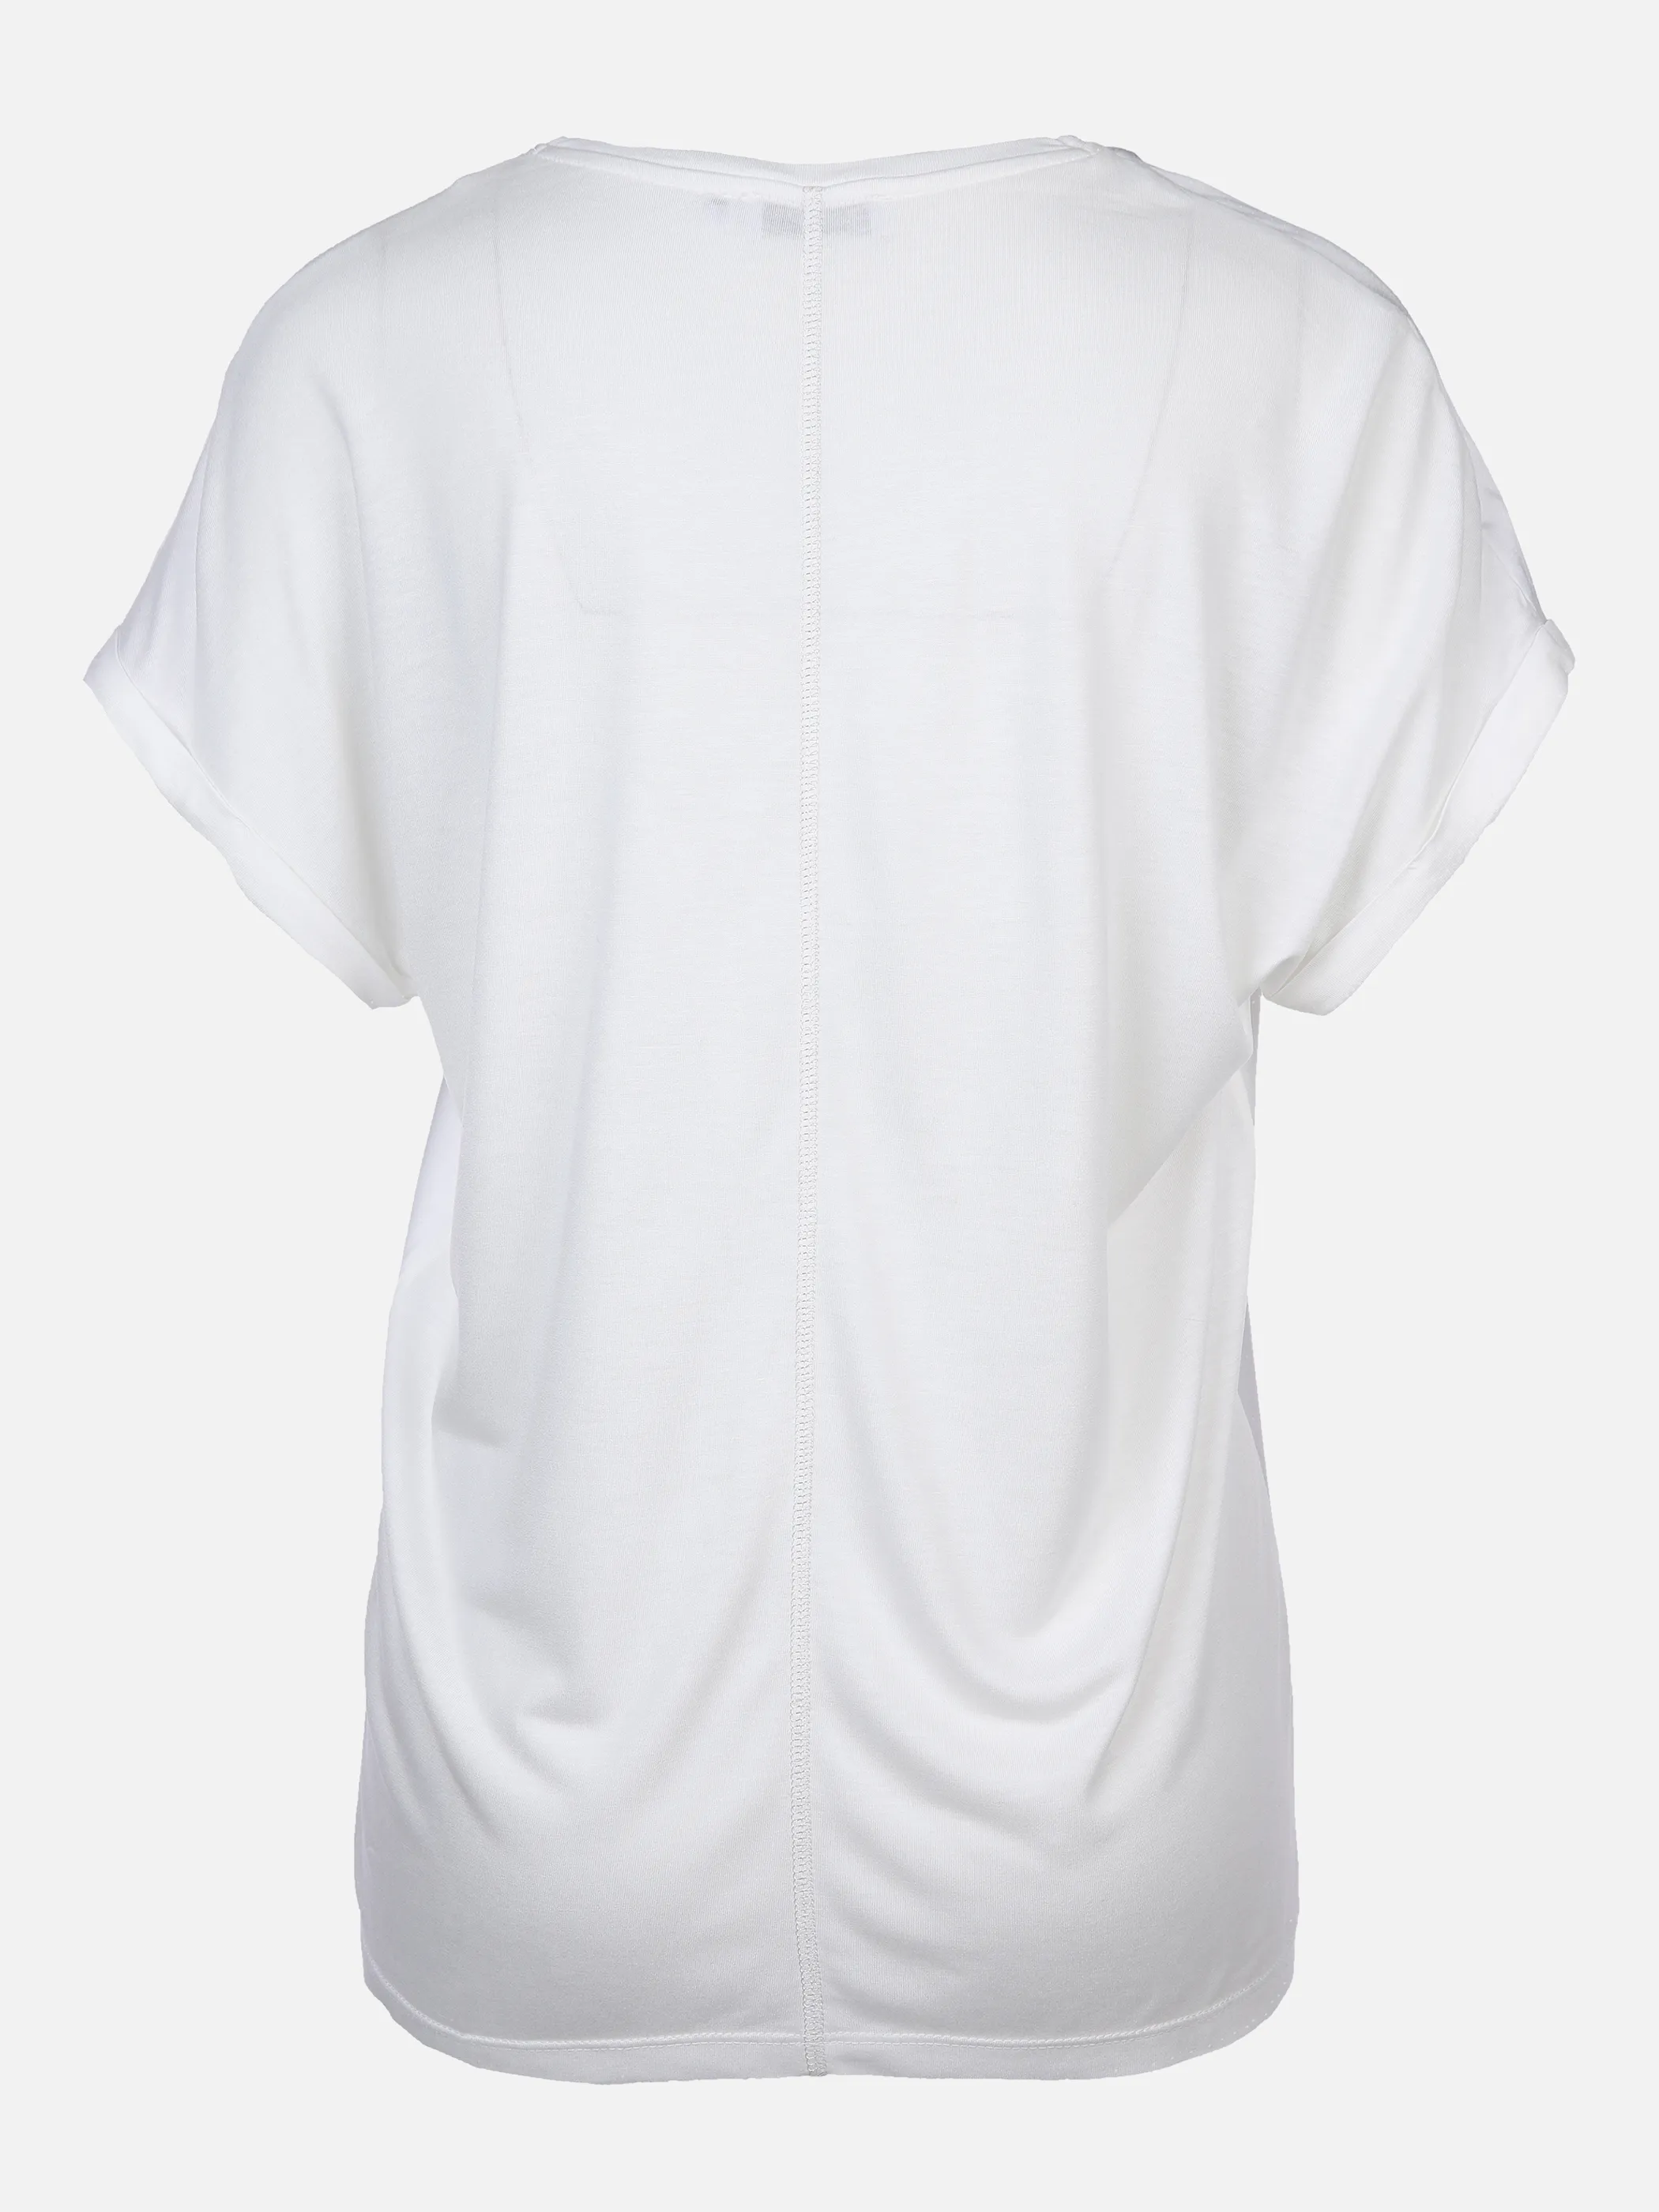 Lisa Tossa Da-T-Shirt mit Folienprint Weiß 878260 OFFWHITE 2